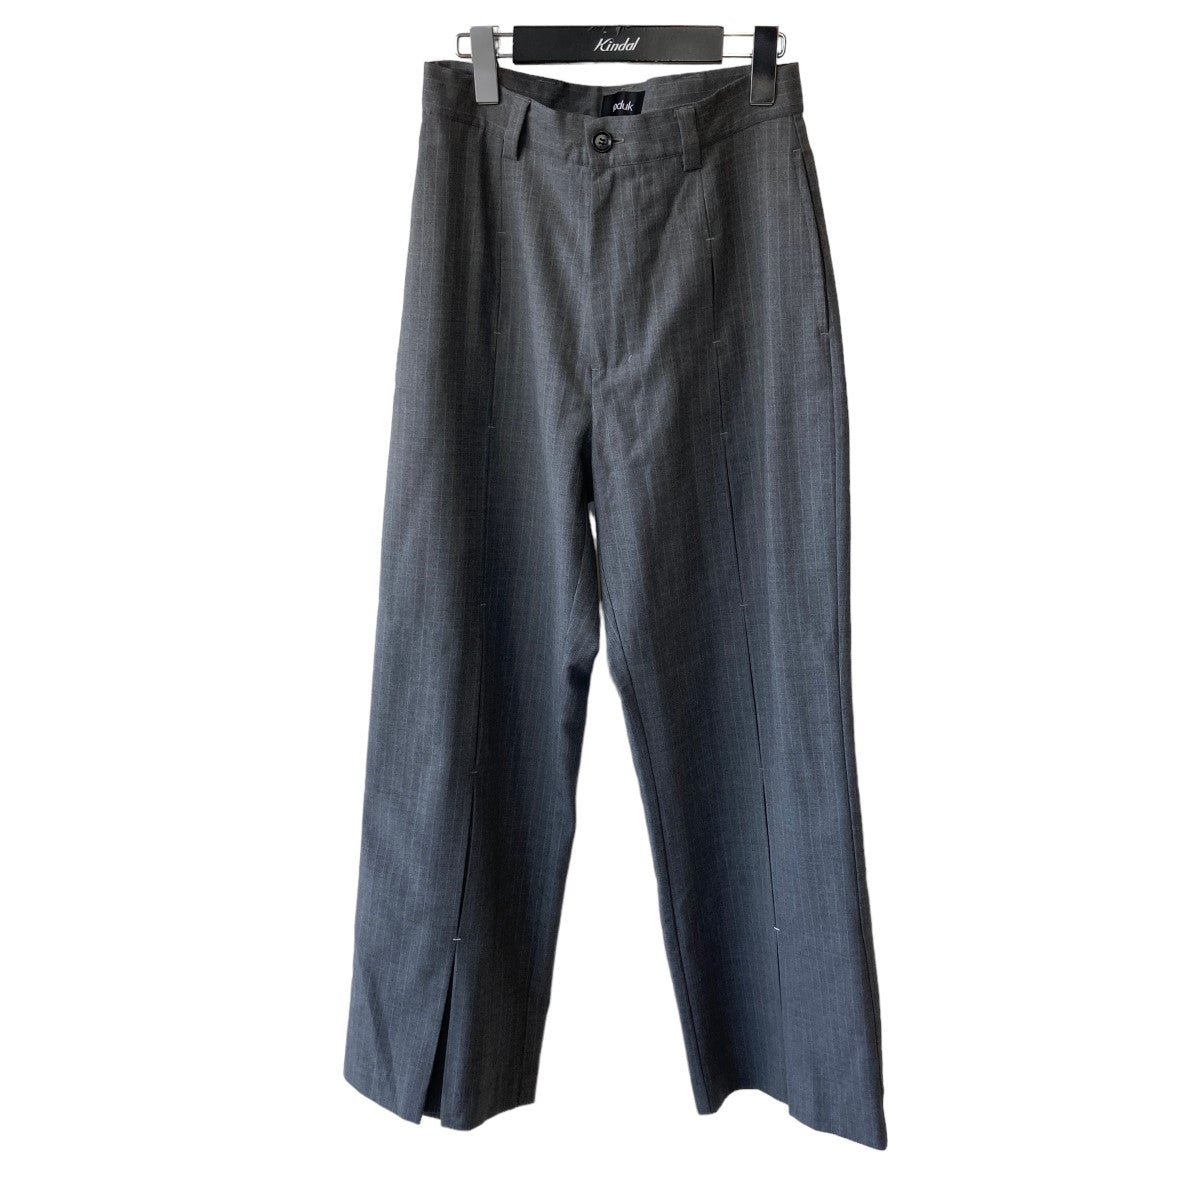 soduk(スドーク) Soduk Inverted Pleats Trousers グレー サイズ 11 